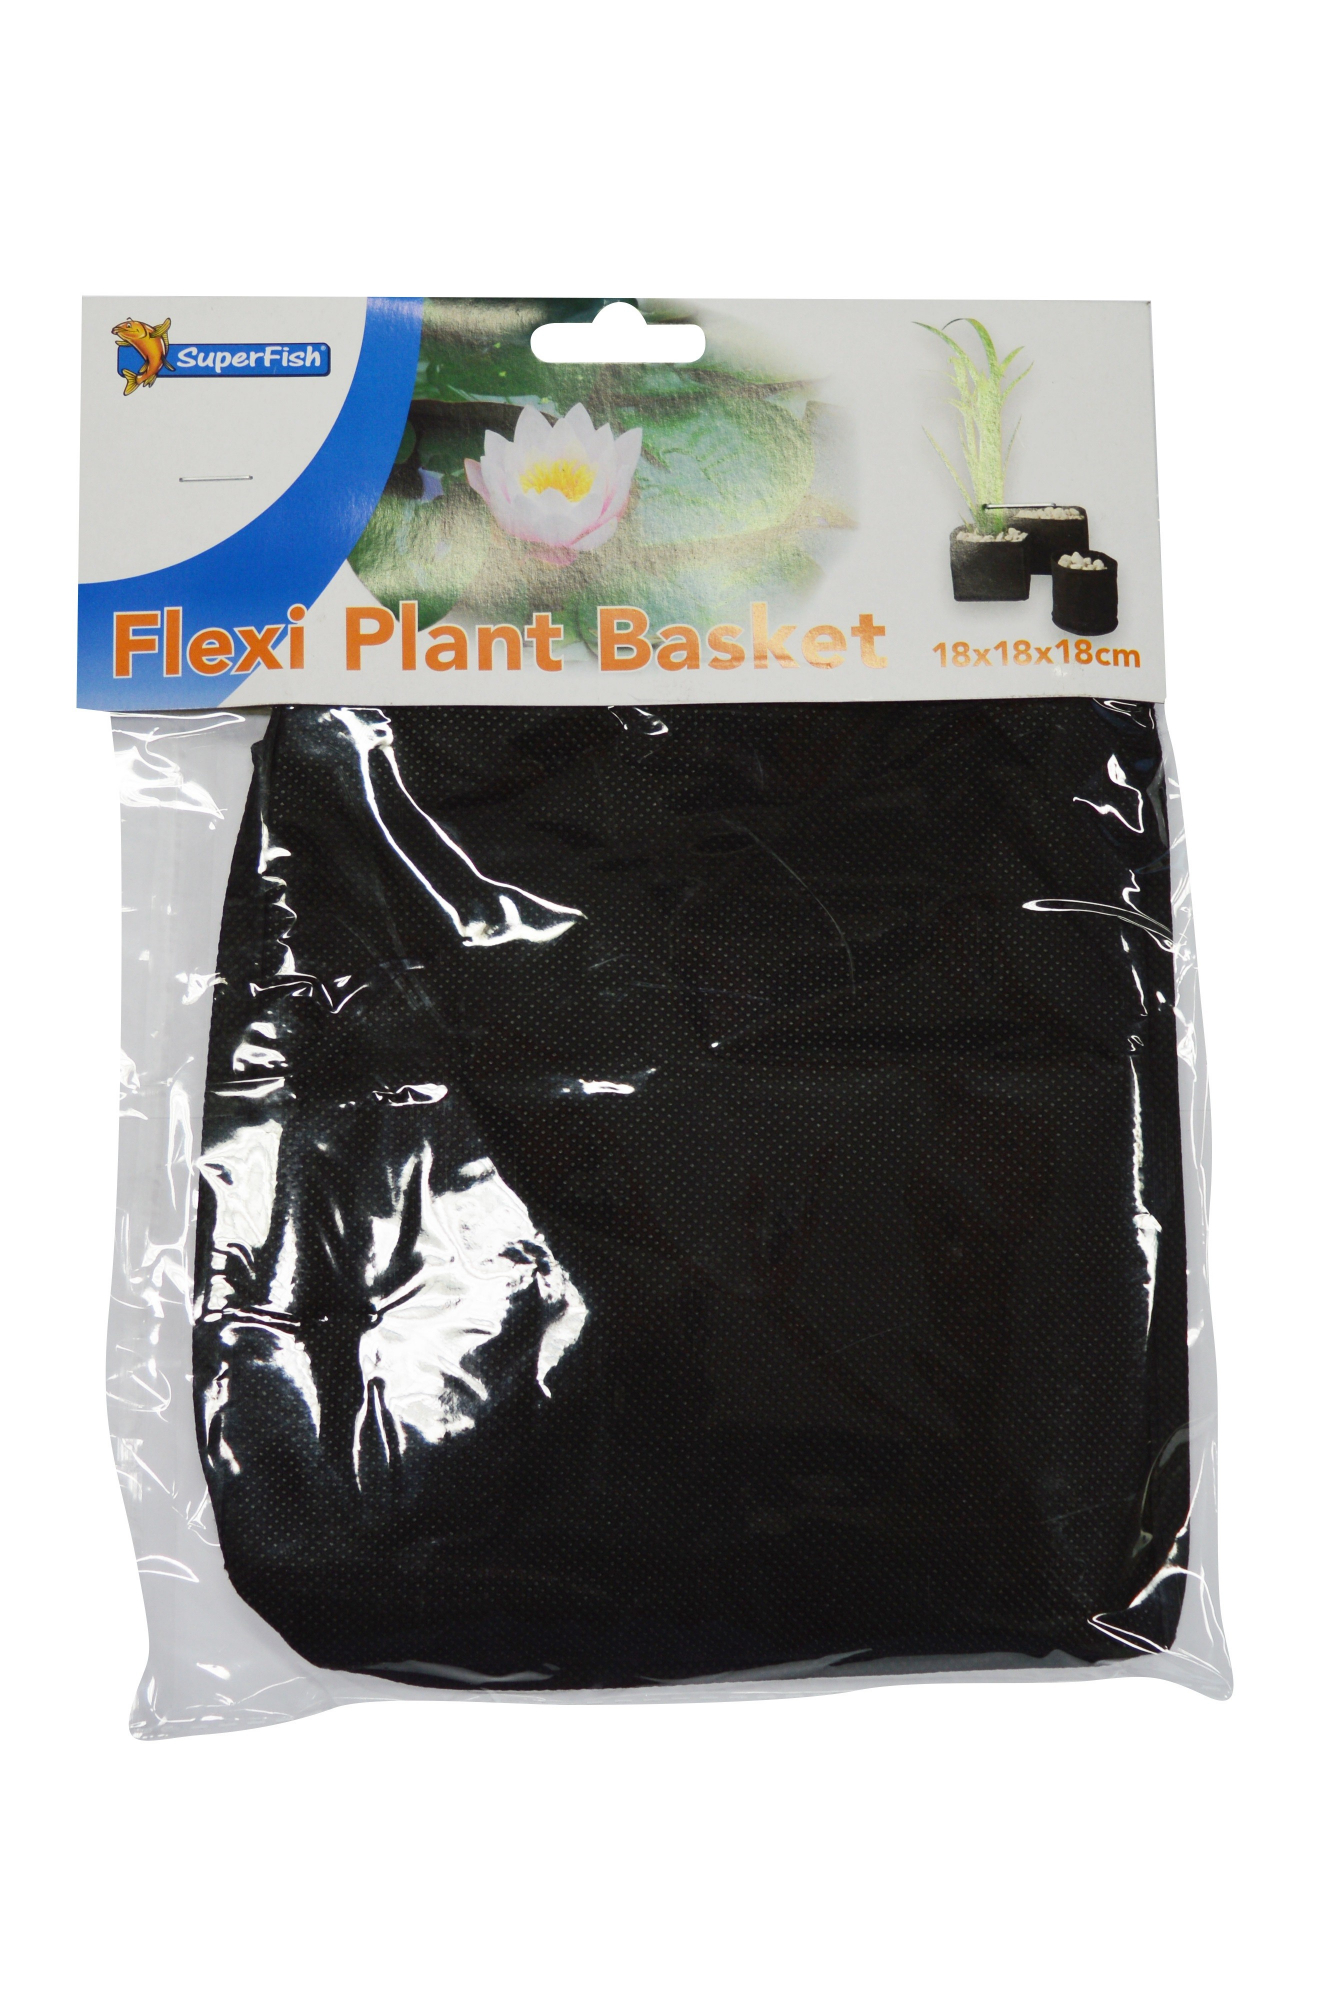 Cesti flessibili FLEXI PLANT 4 modelli